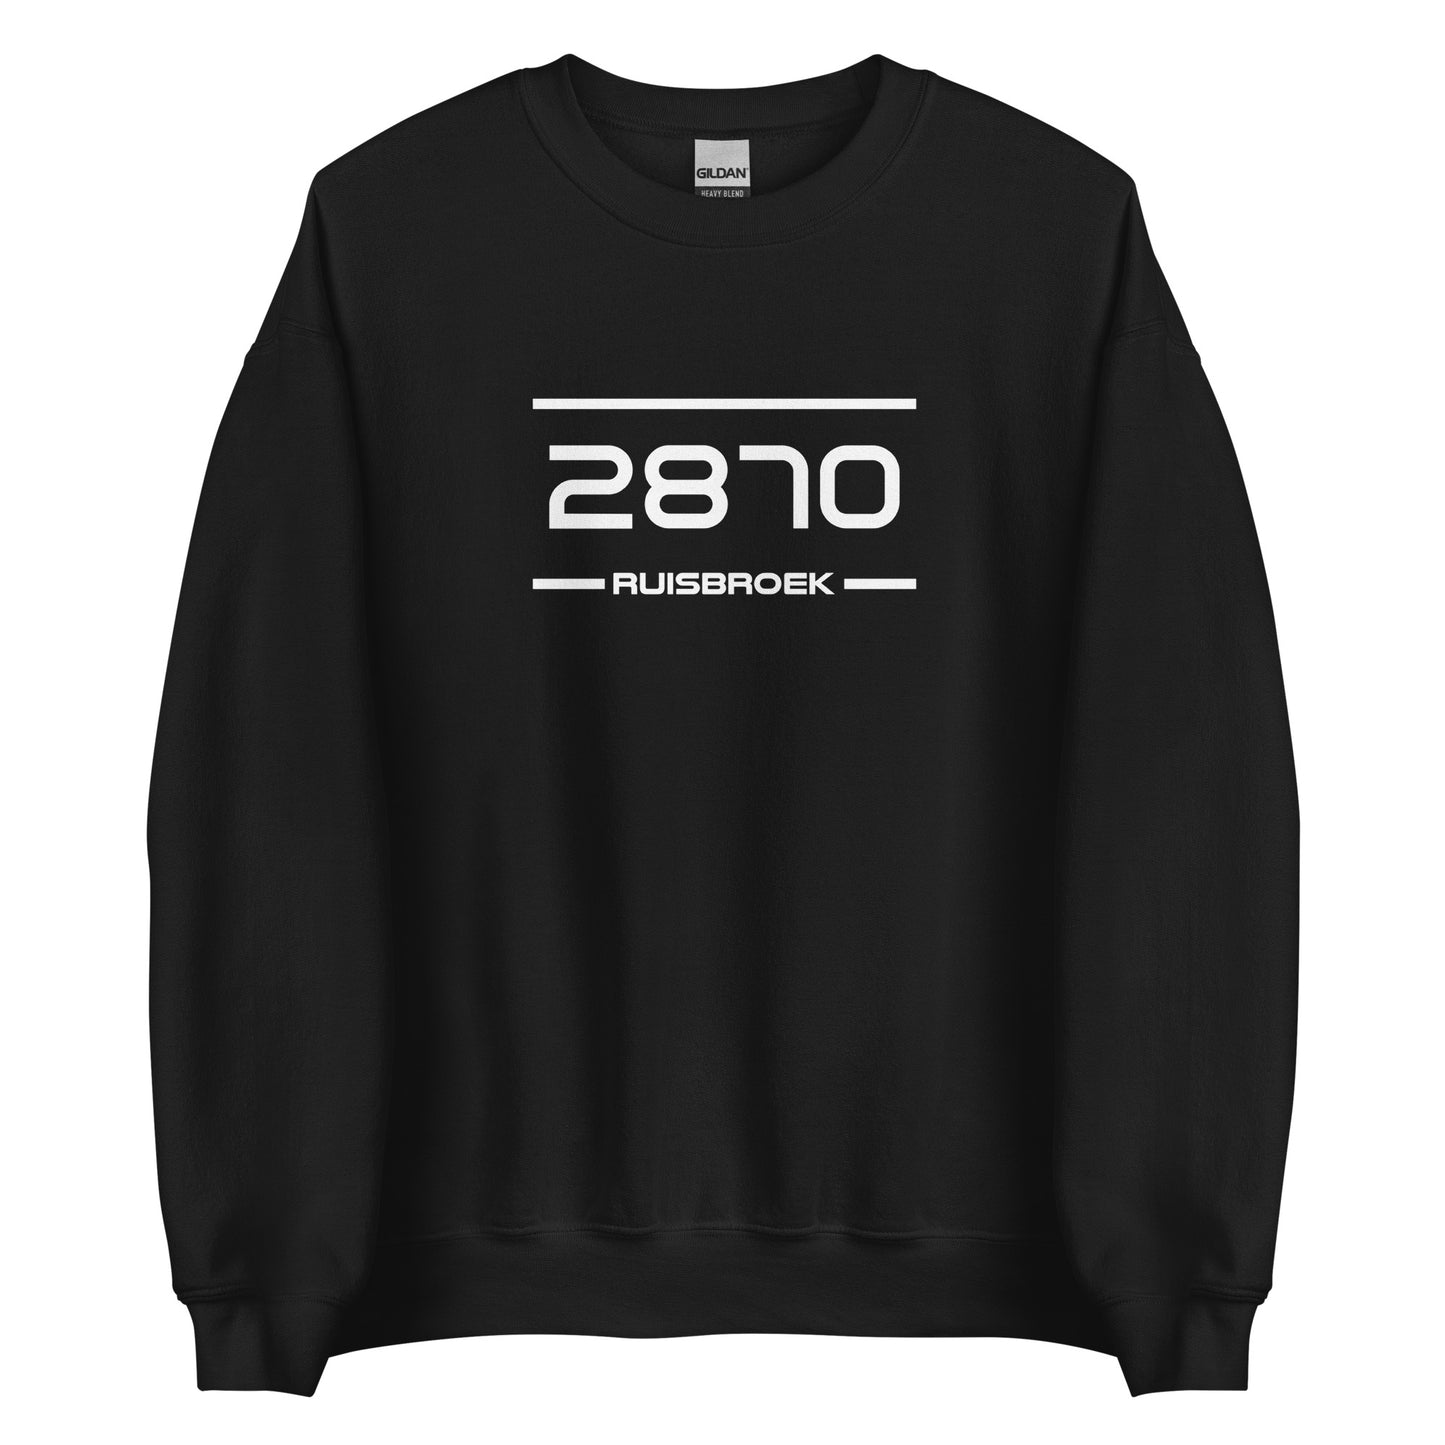 Sweater - 2870 - Ruisbroek (M/V)